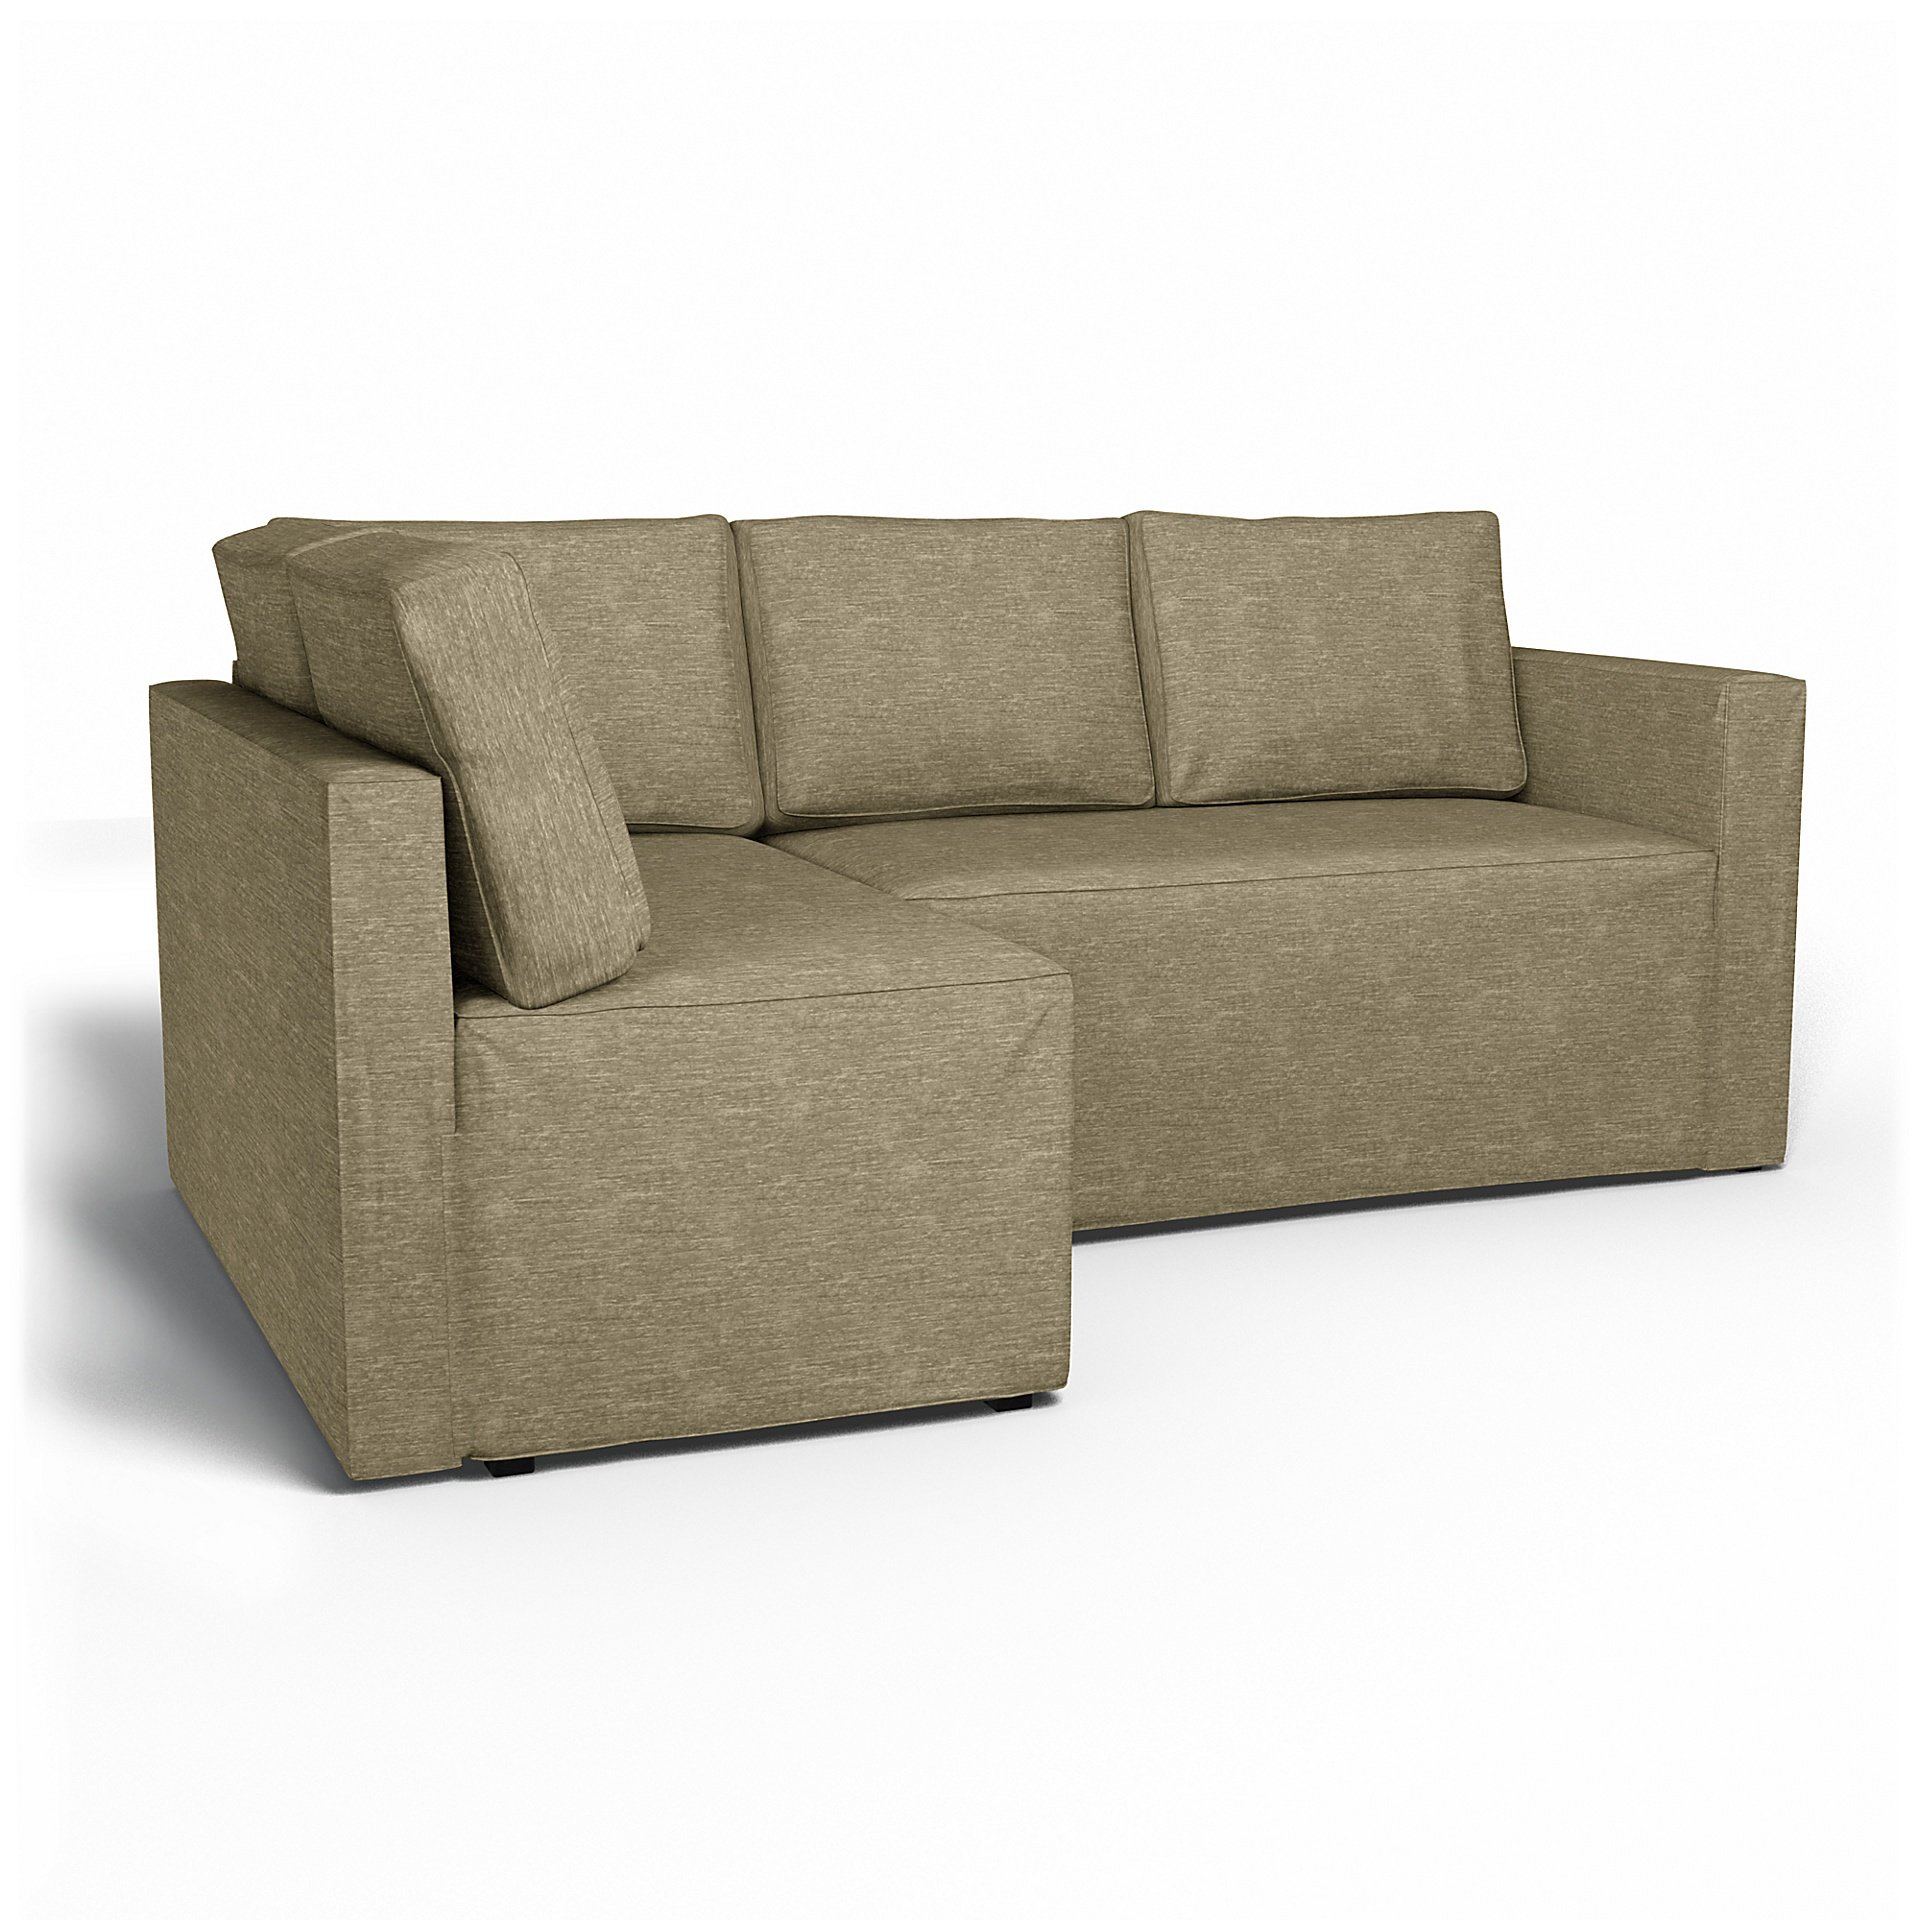 IKEA - Fagelbo Sofa Bed with Left Chaise Cover, Beige, Velvet - Bemz